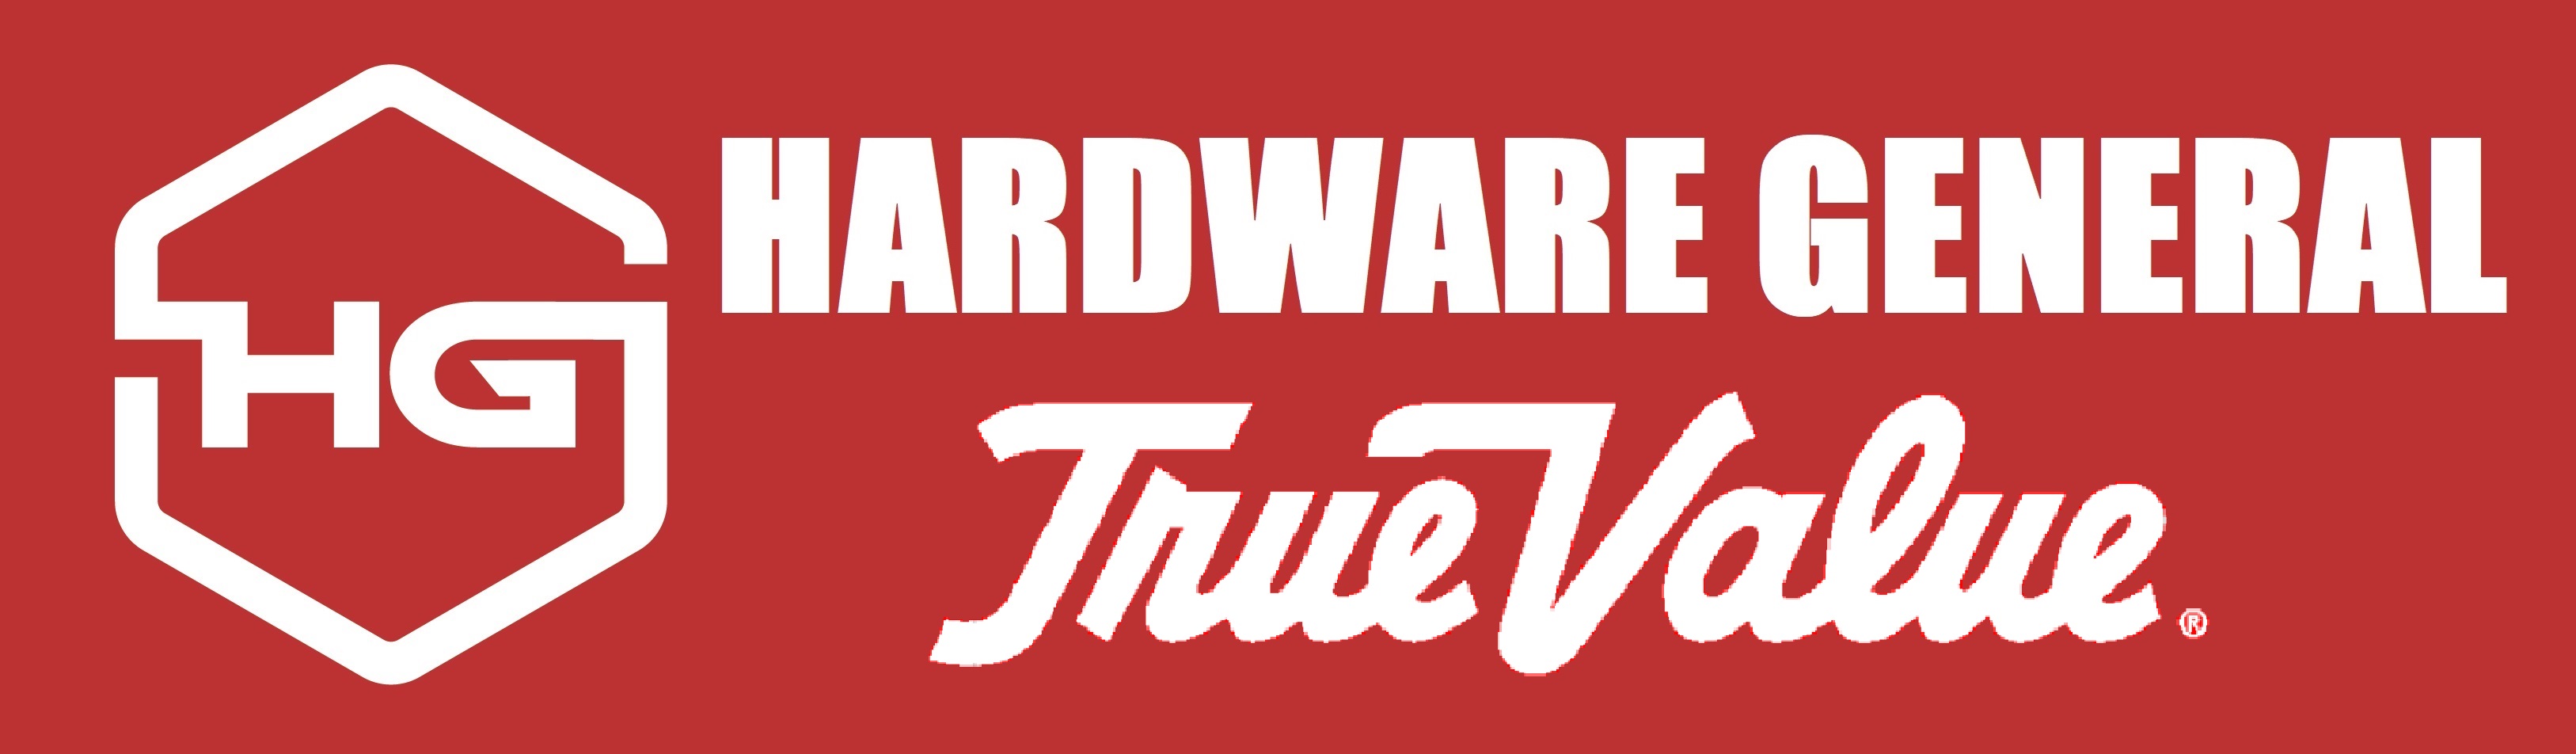 Hardware General